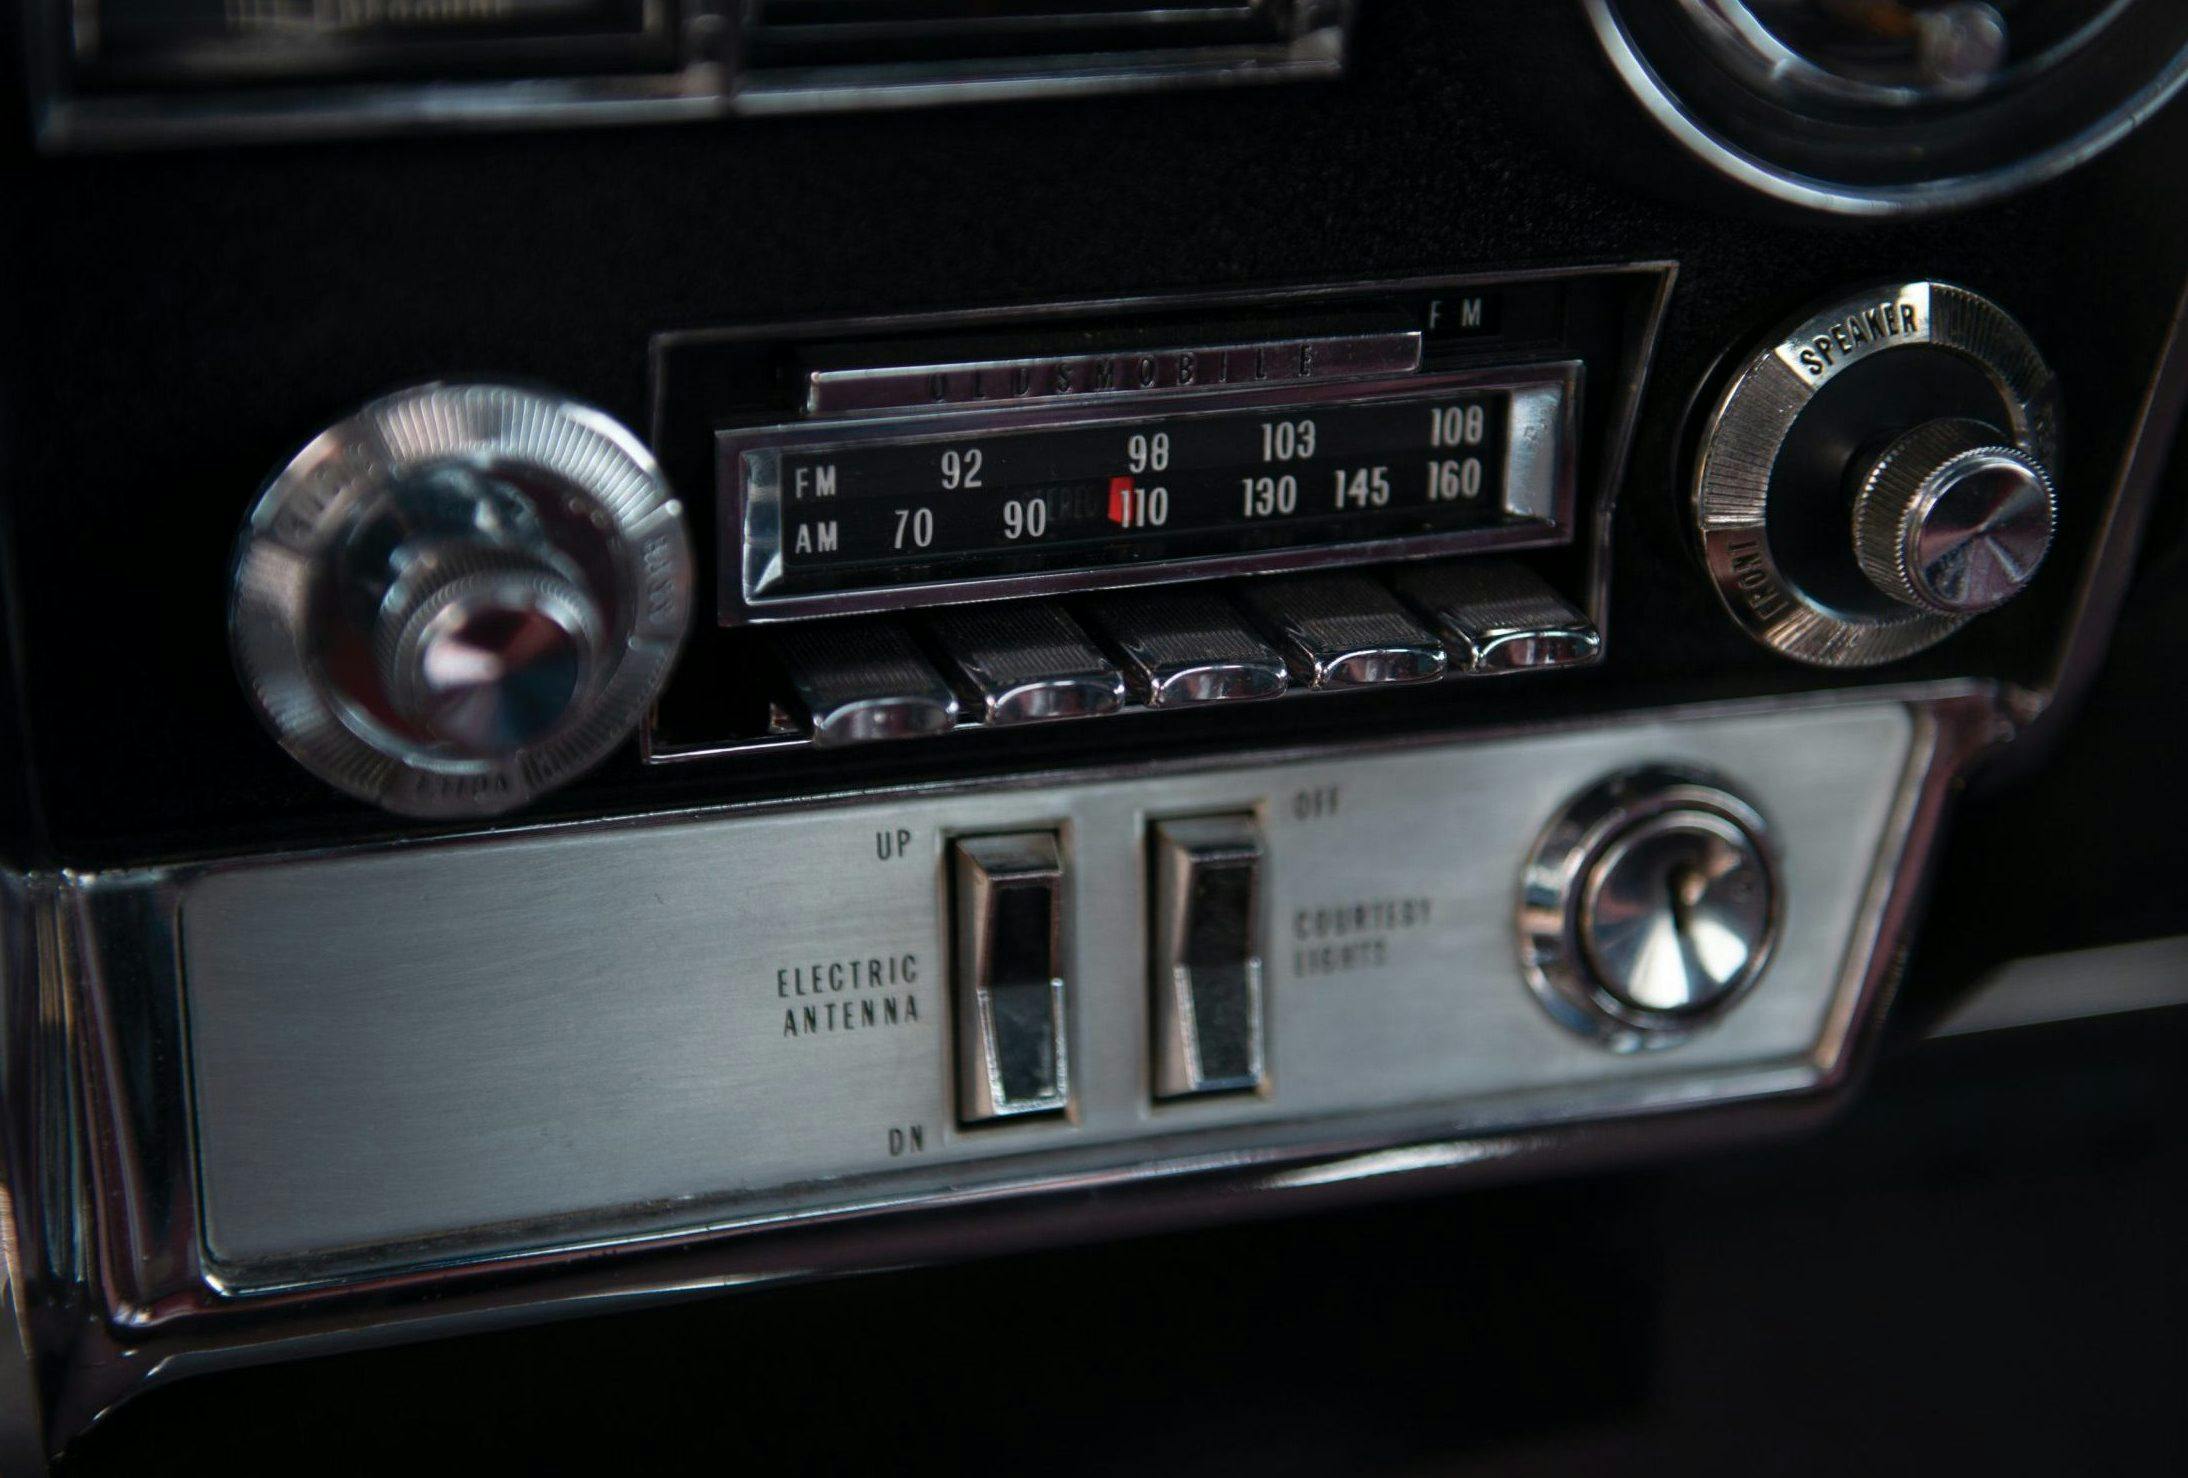 Olds Toronado radio detail